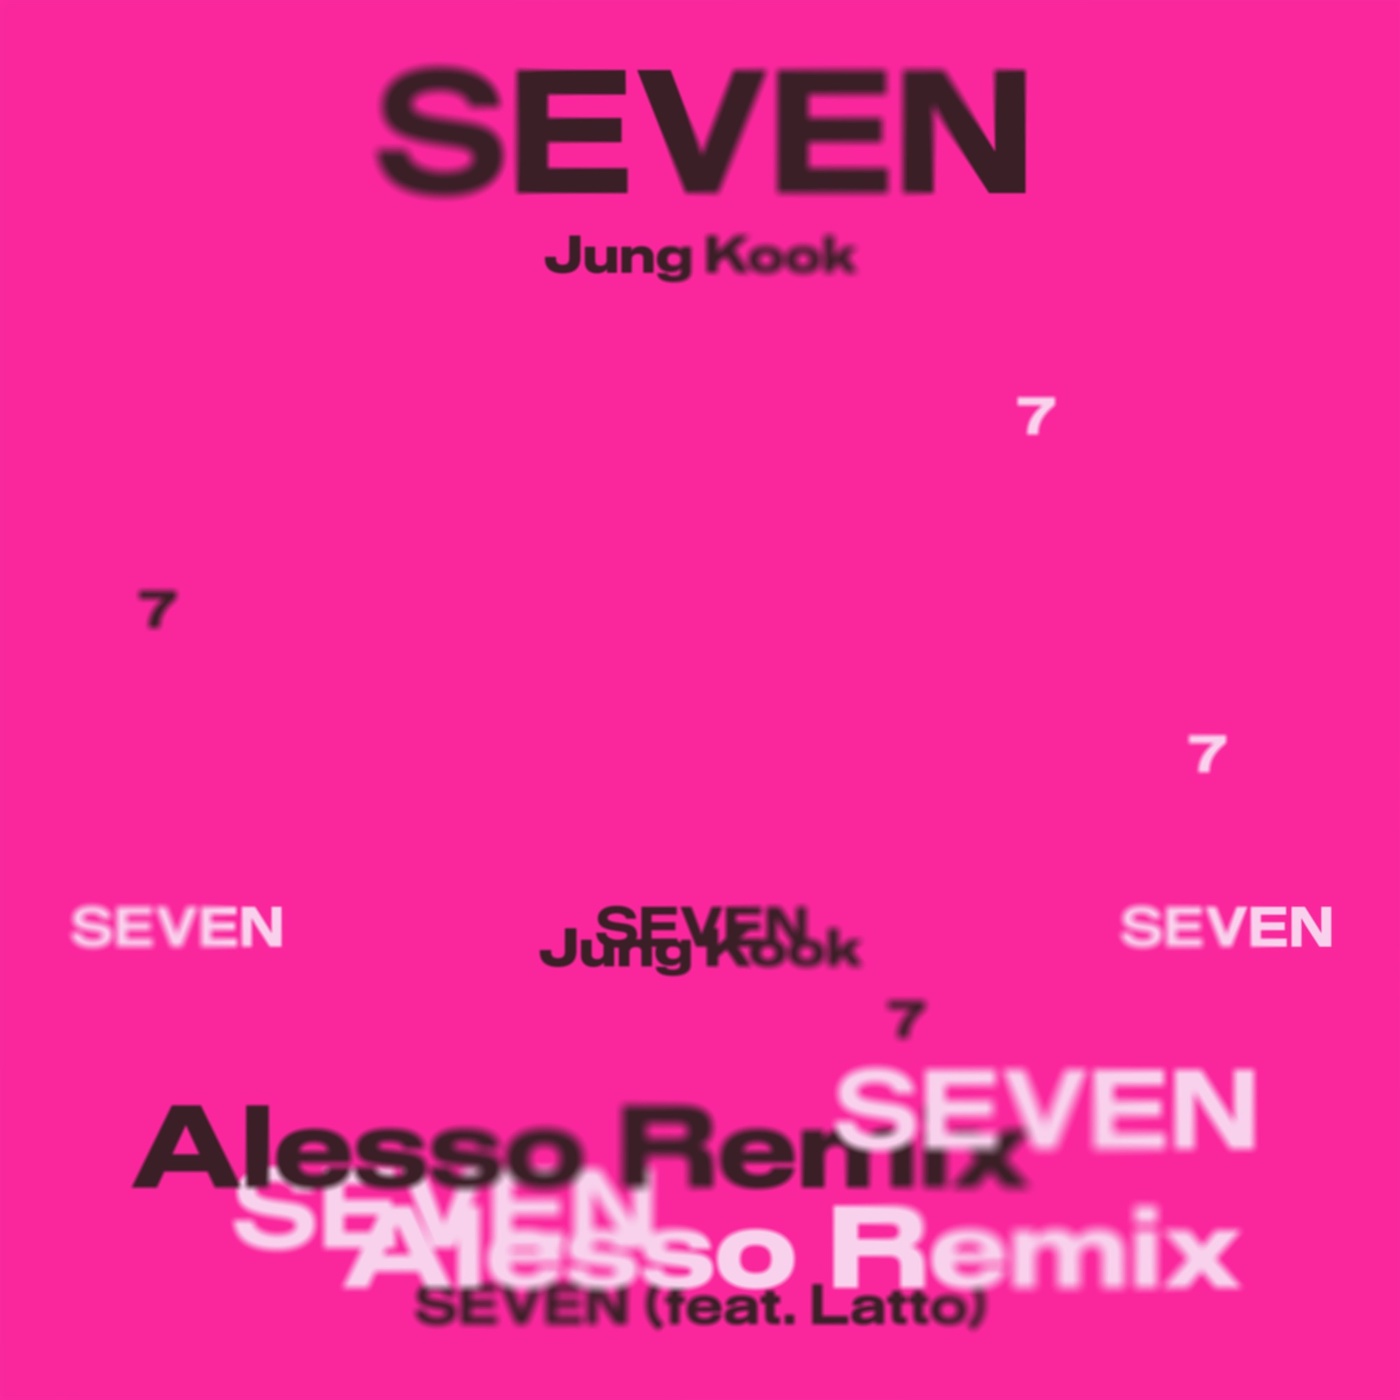 BTS・JUNG KOOK「Seven（feat. Latto）- Alesso Remix」を発表